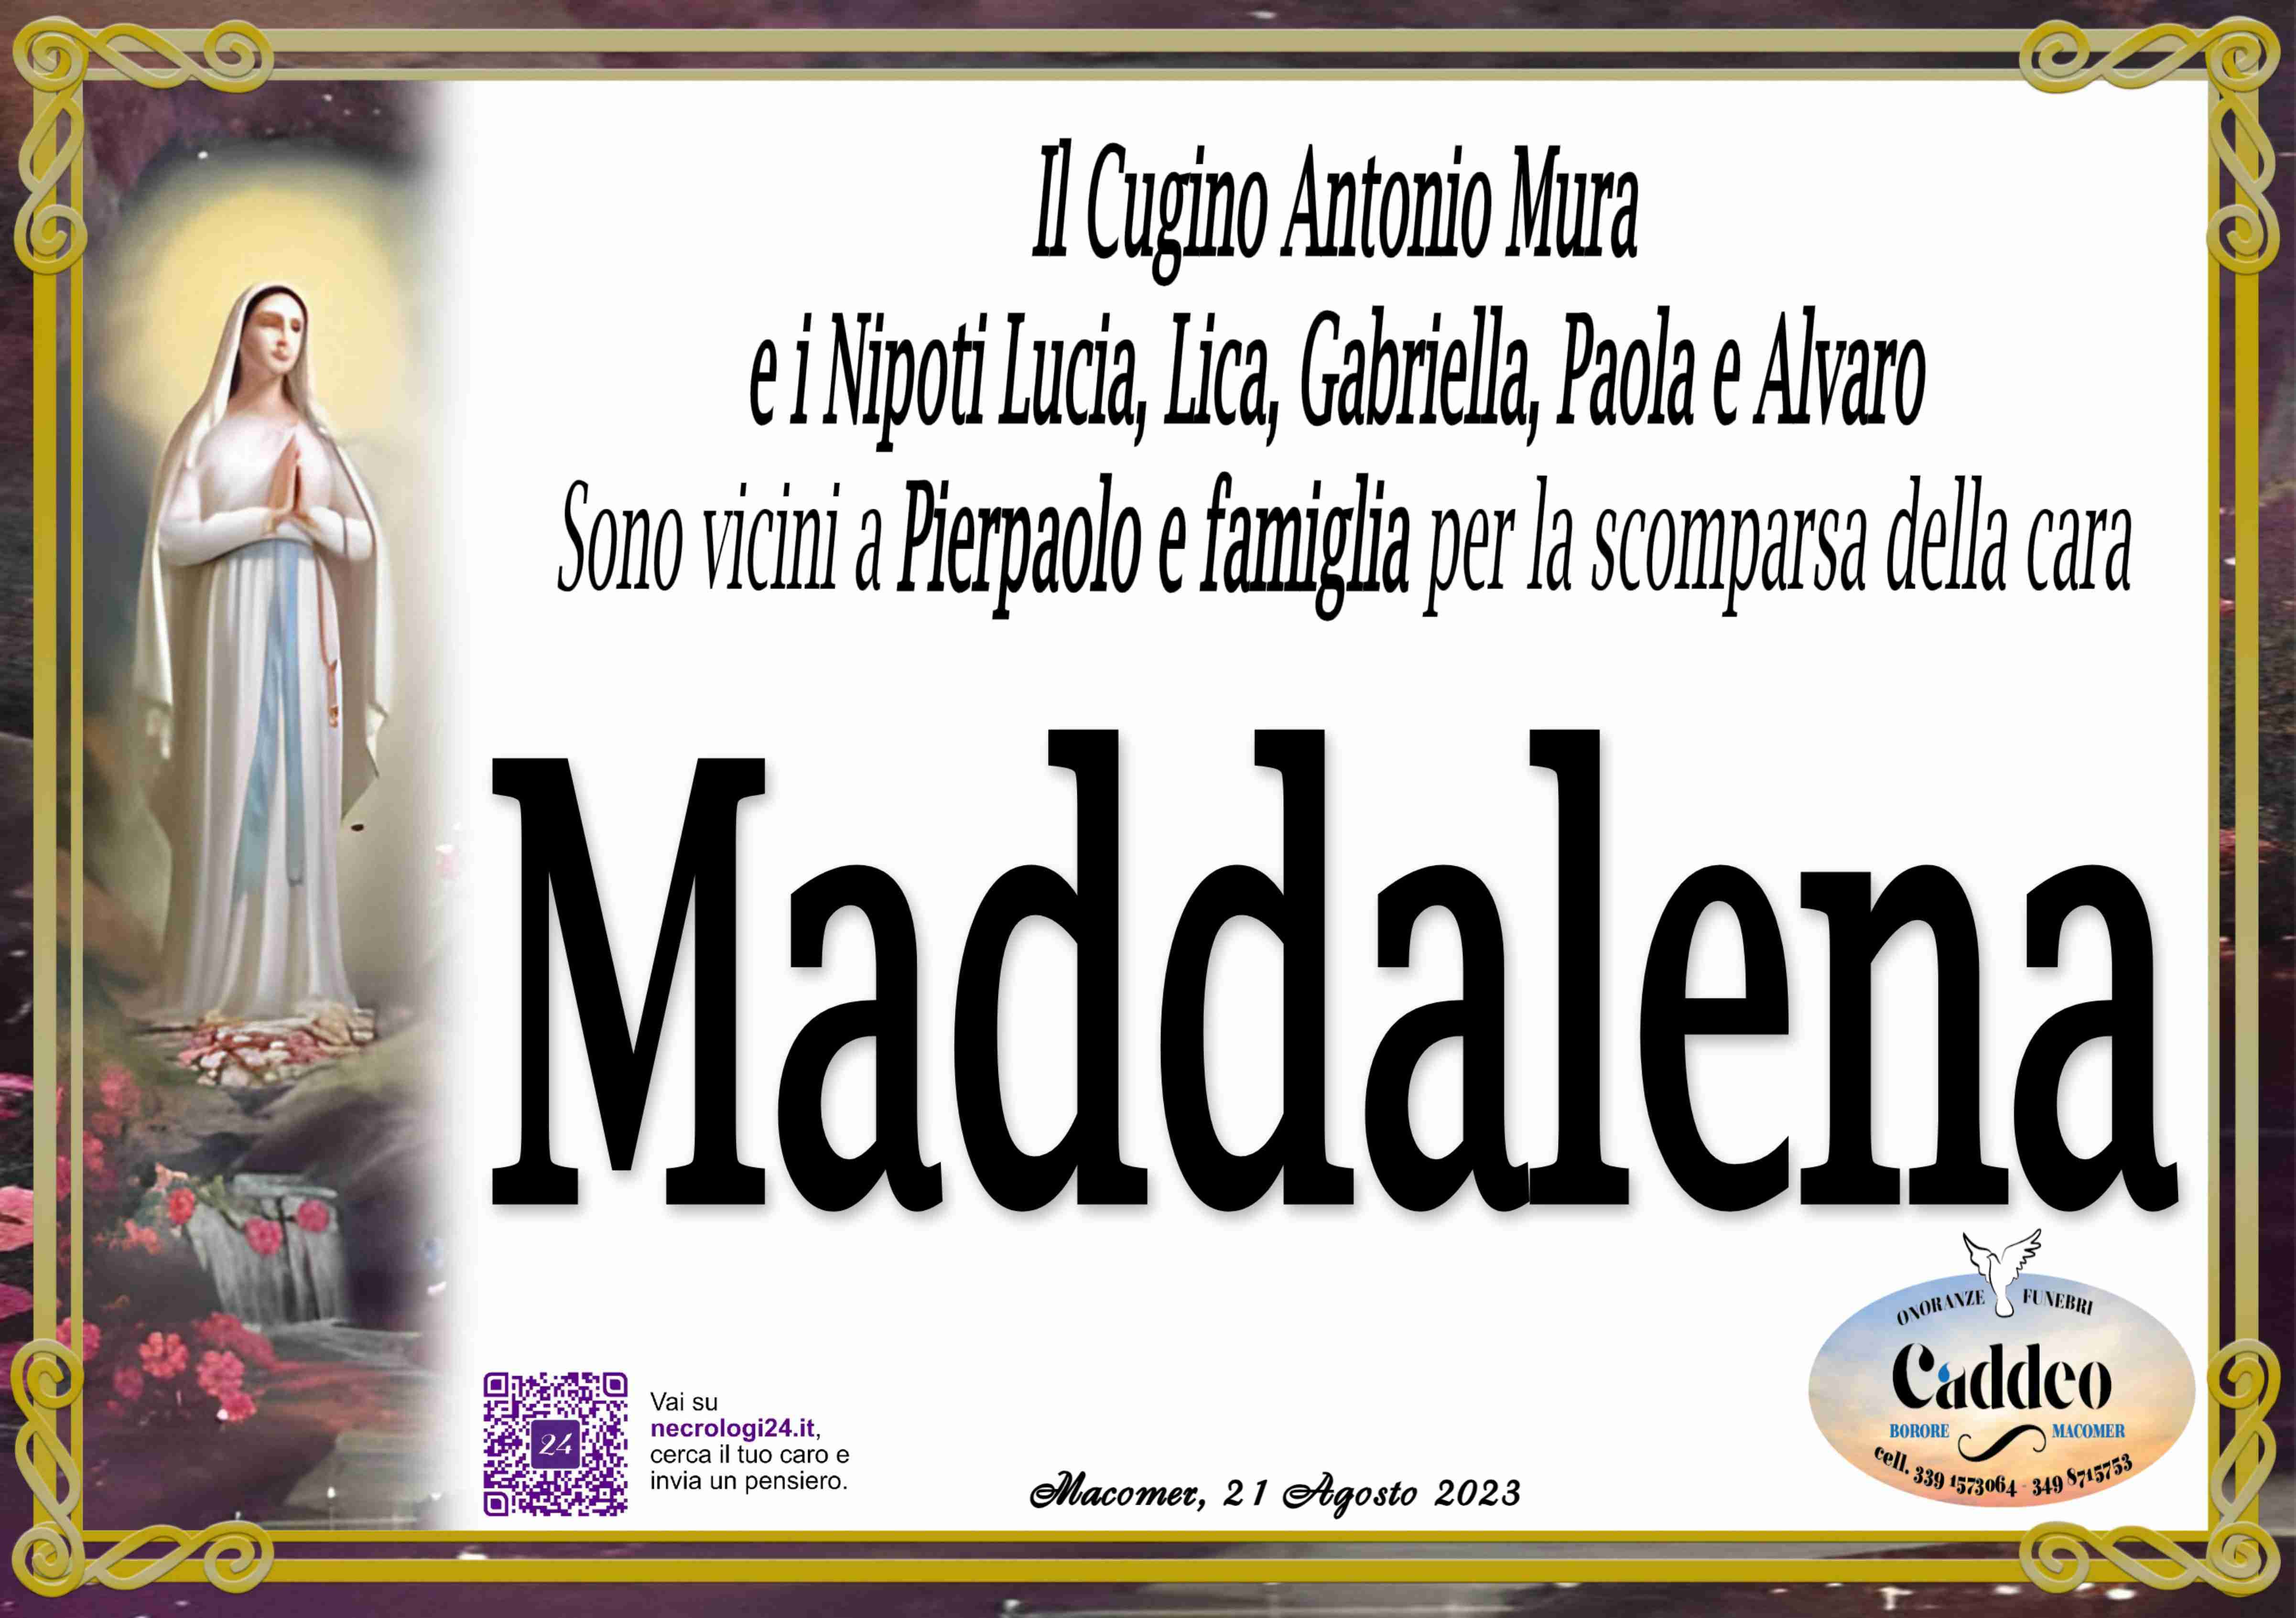 Maddalena Marras